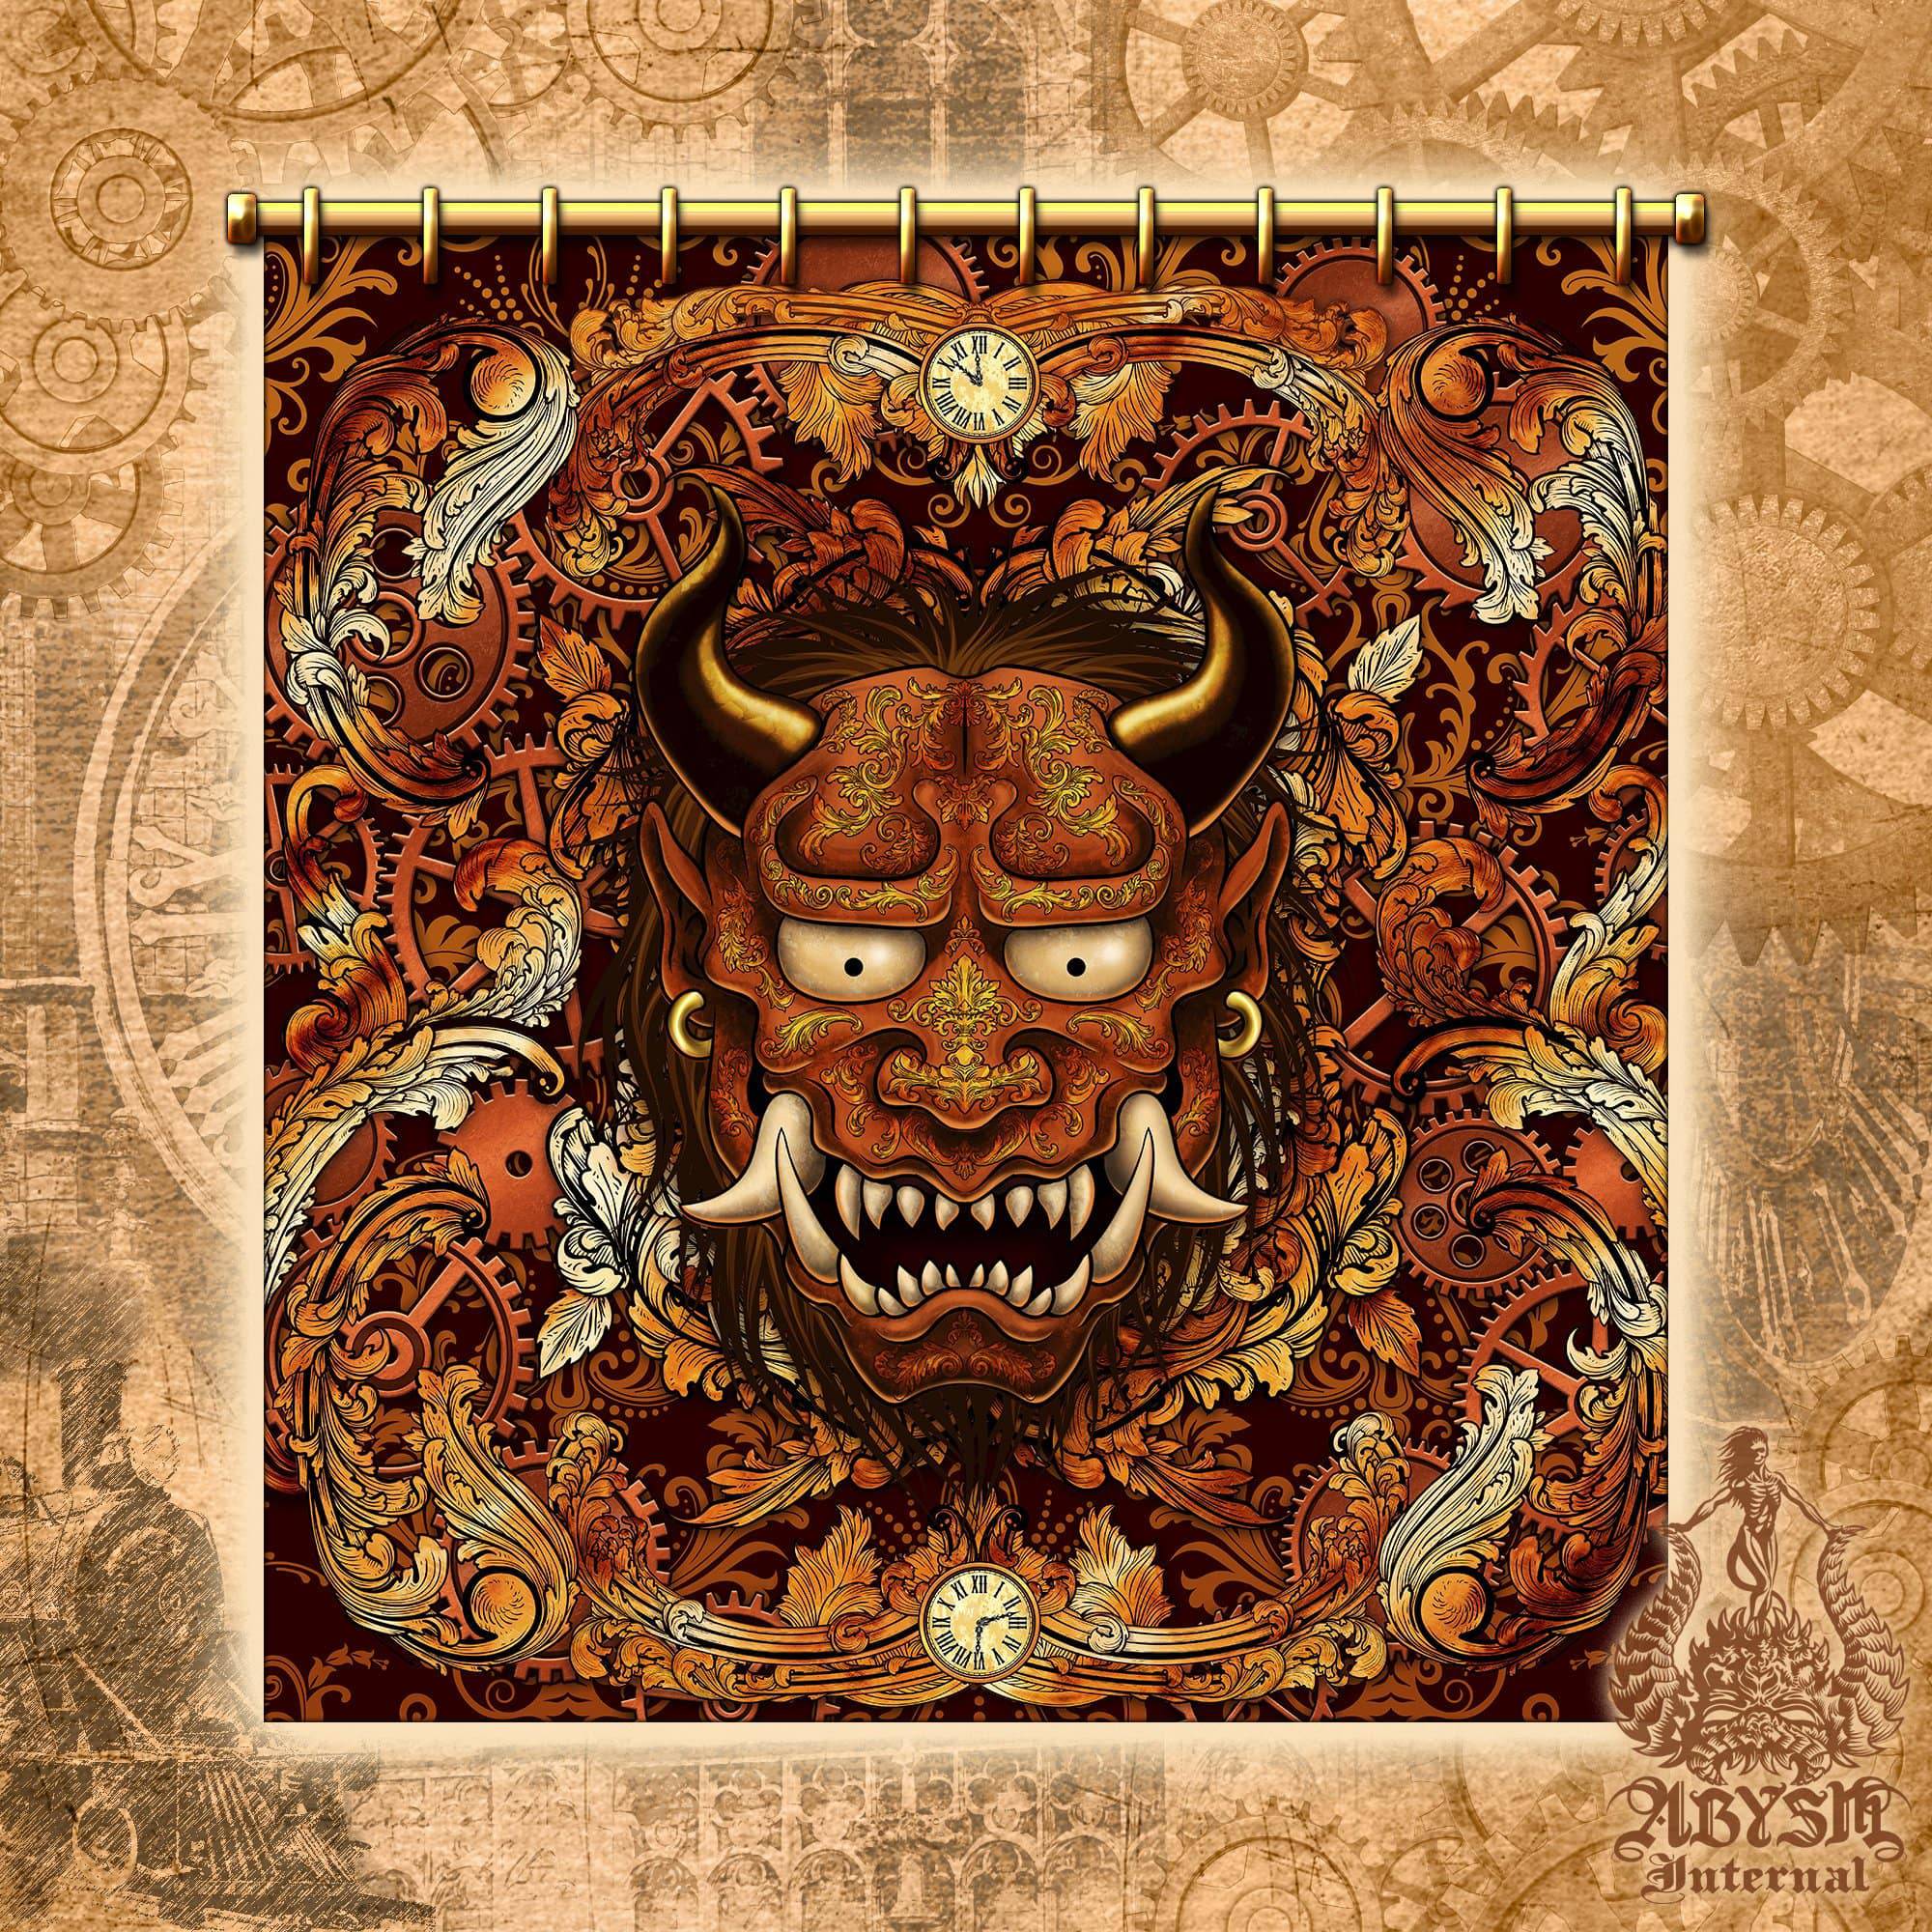 Steampunk Shower Curtain, Oni Bathroom Decor, Fantasy, Japanese Demon - Abysm Internal